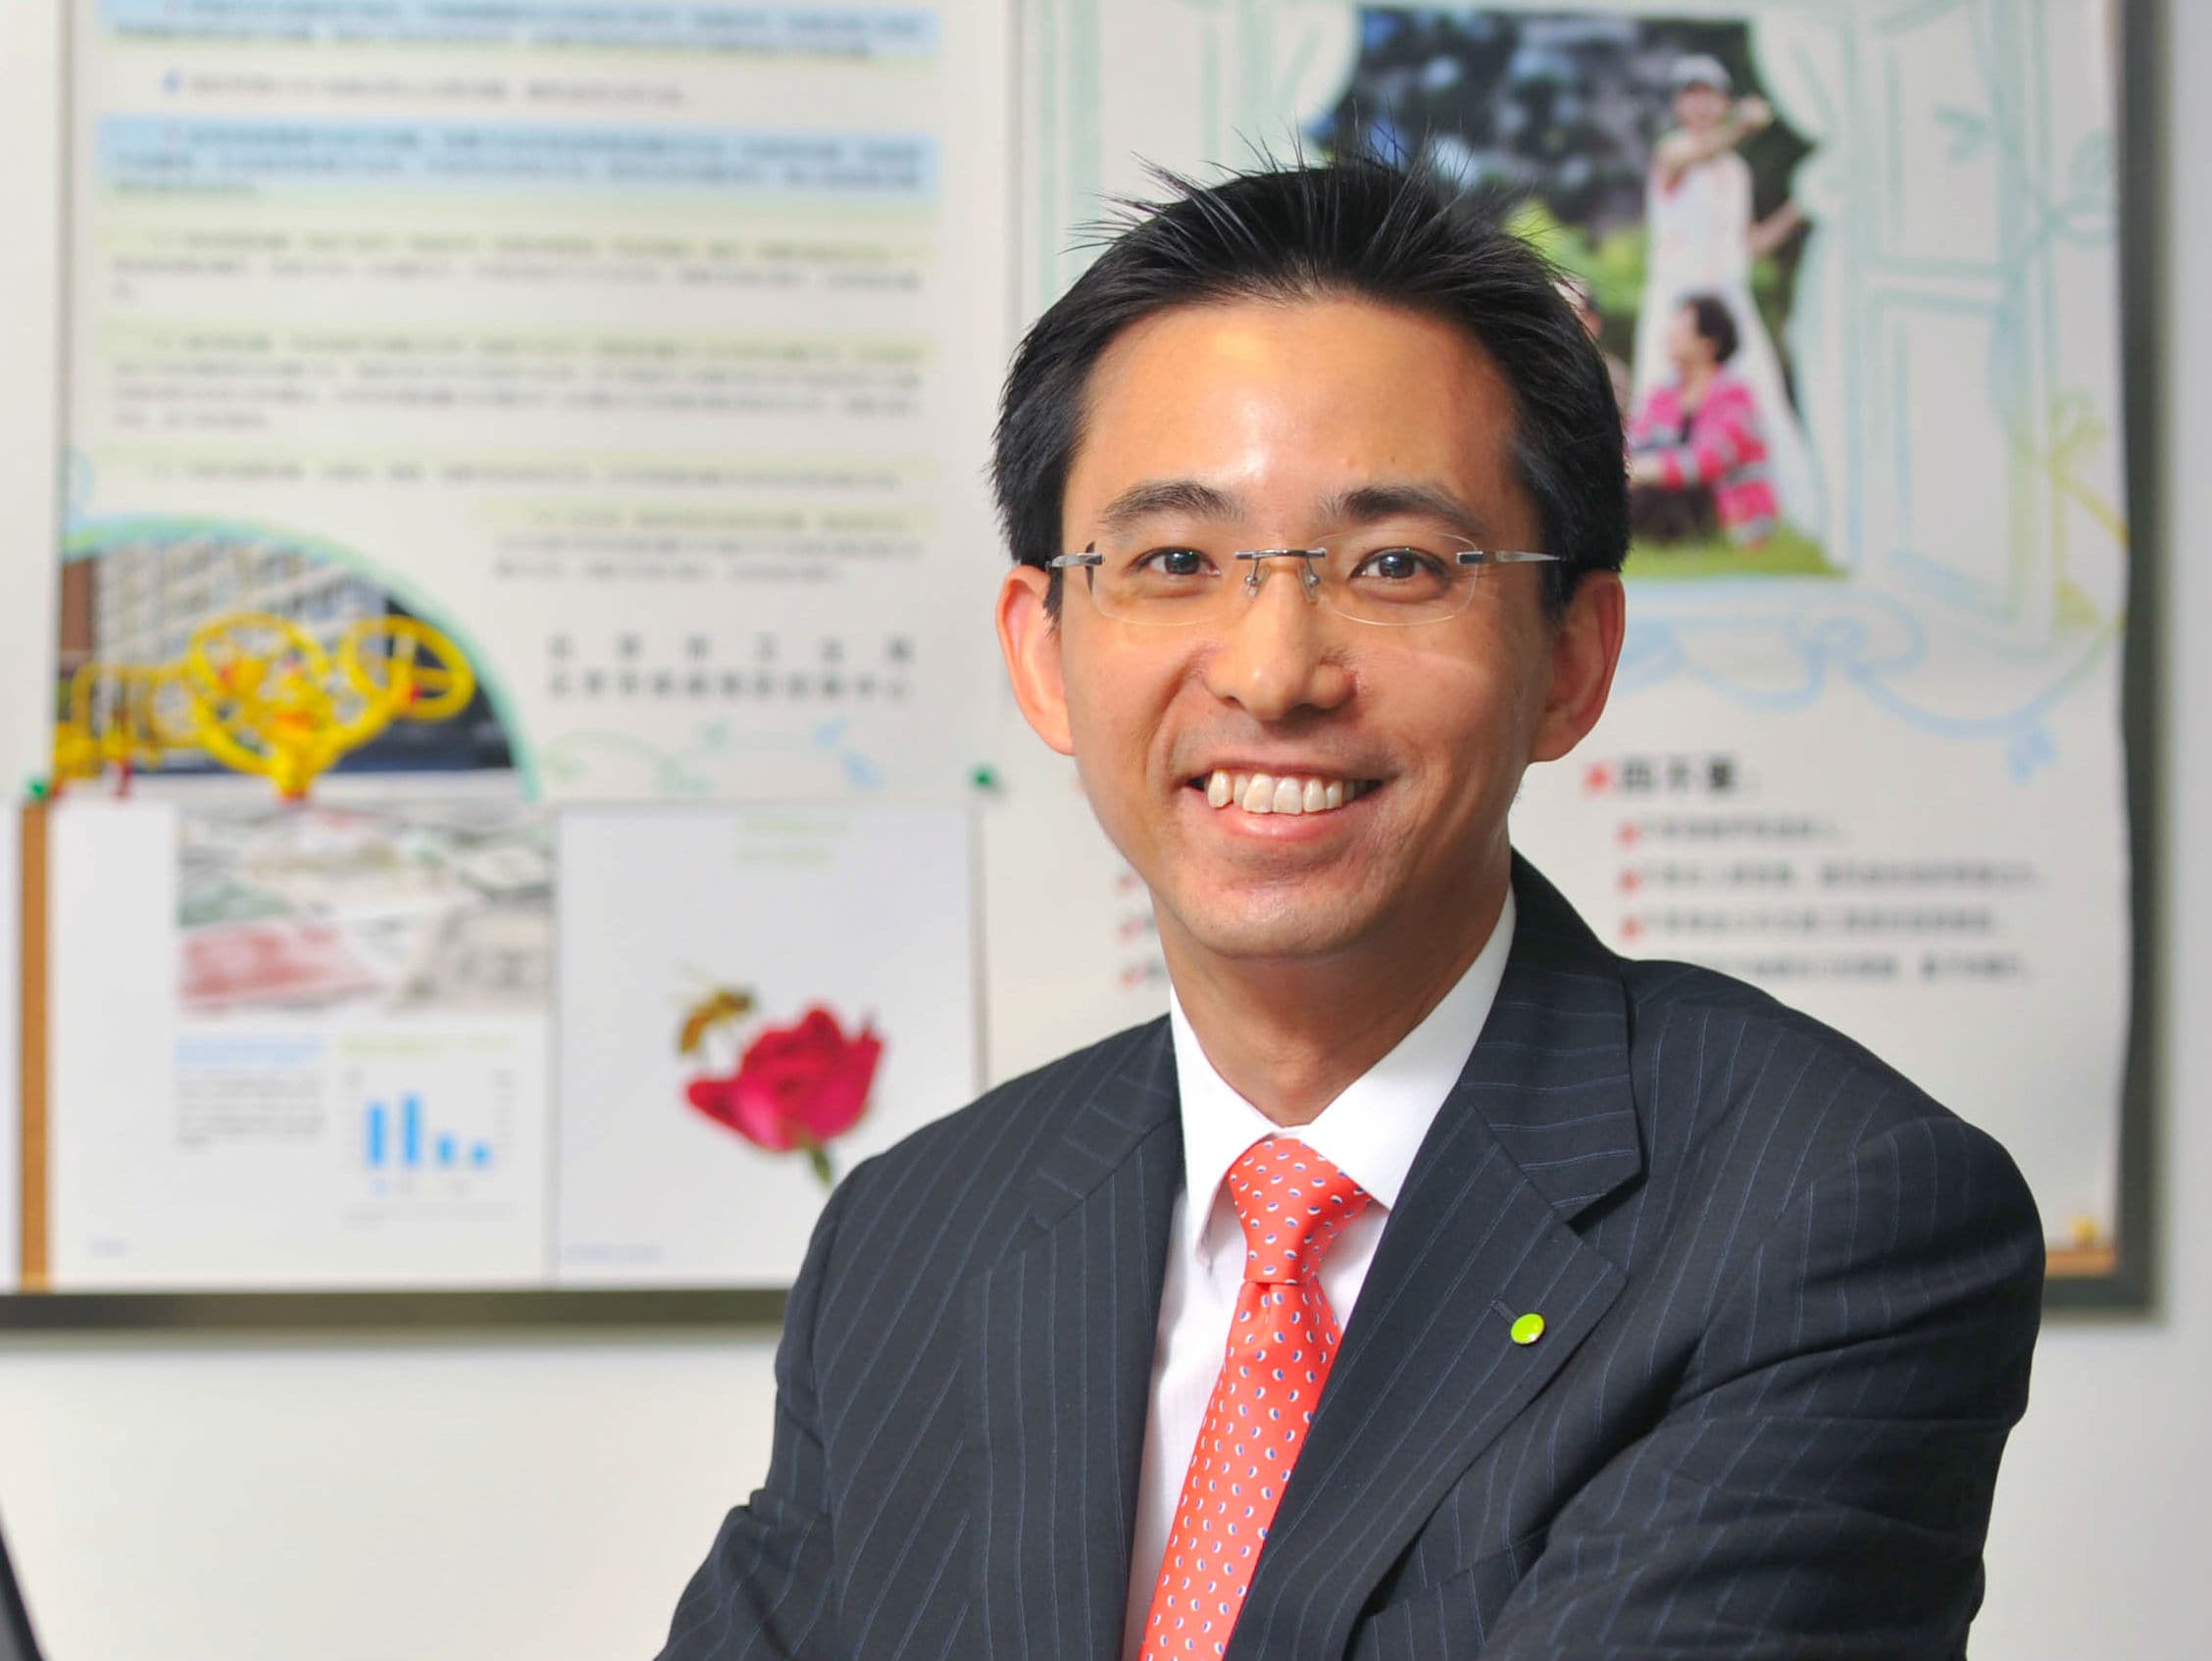 Eddie Chiu, National Managing Partner, Enterprise Risk Services, Deloitte China